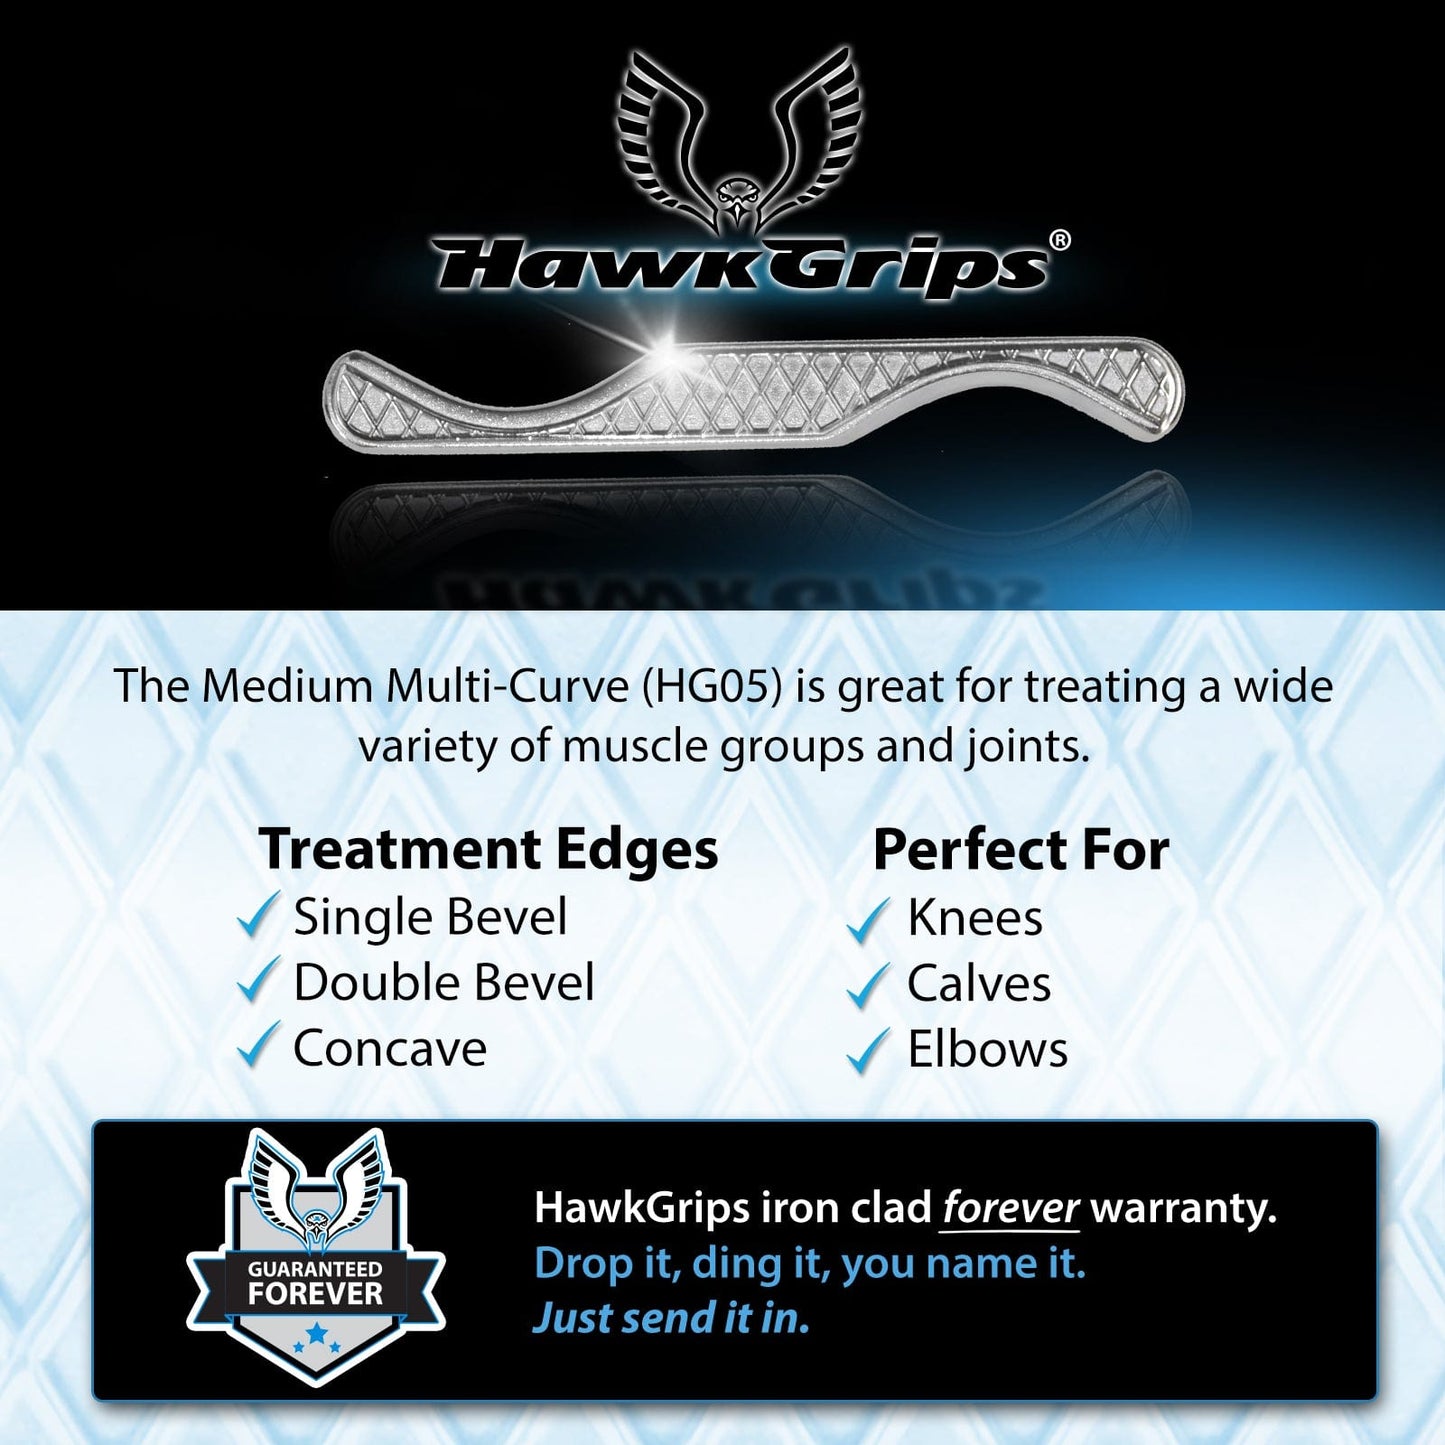 HawkGrips Instruments HG5 - Medium Multi-Curve